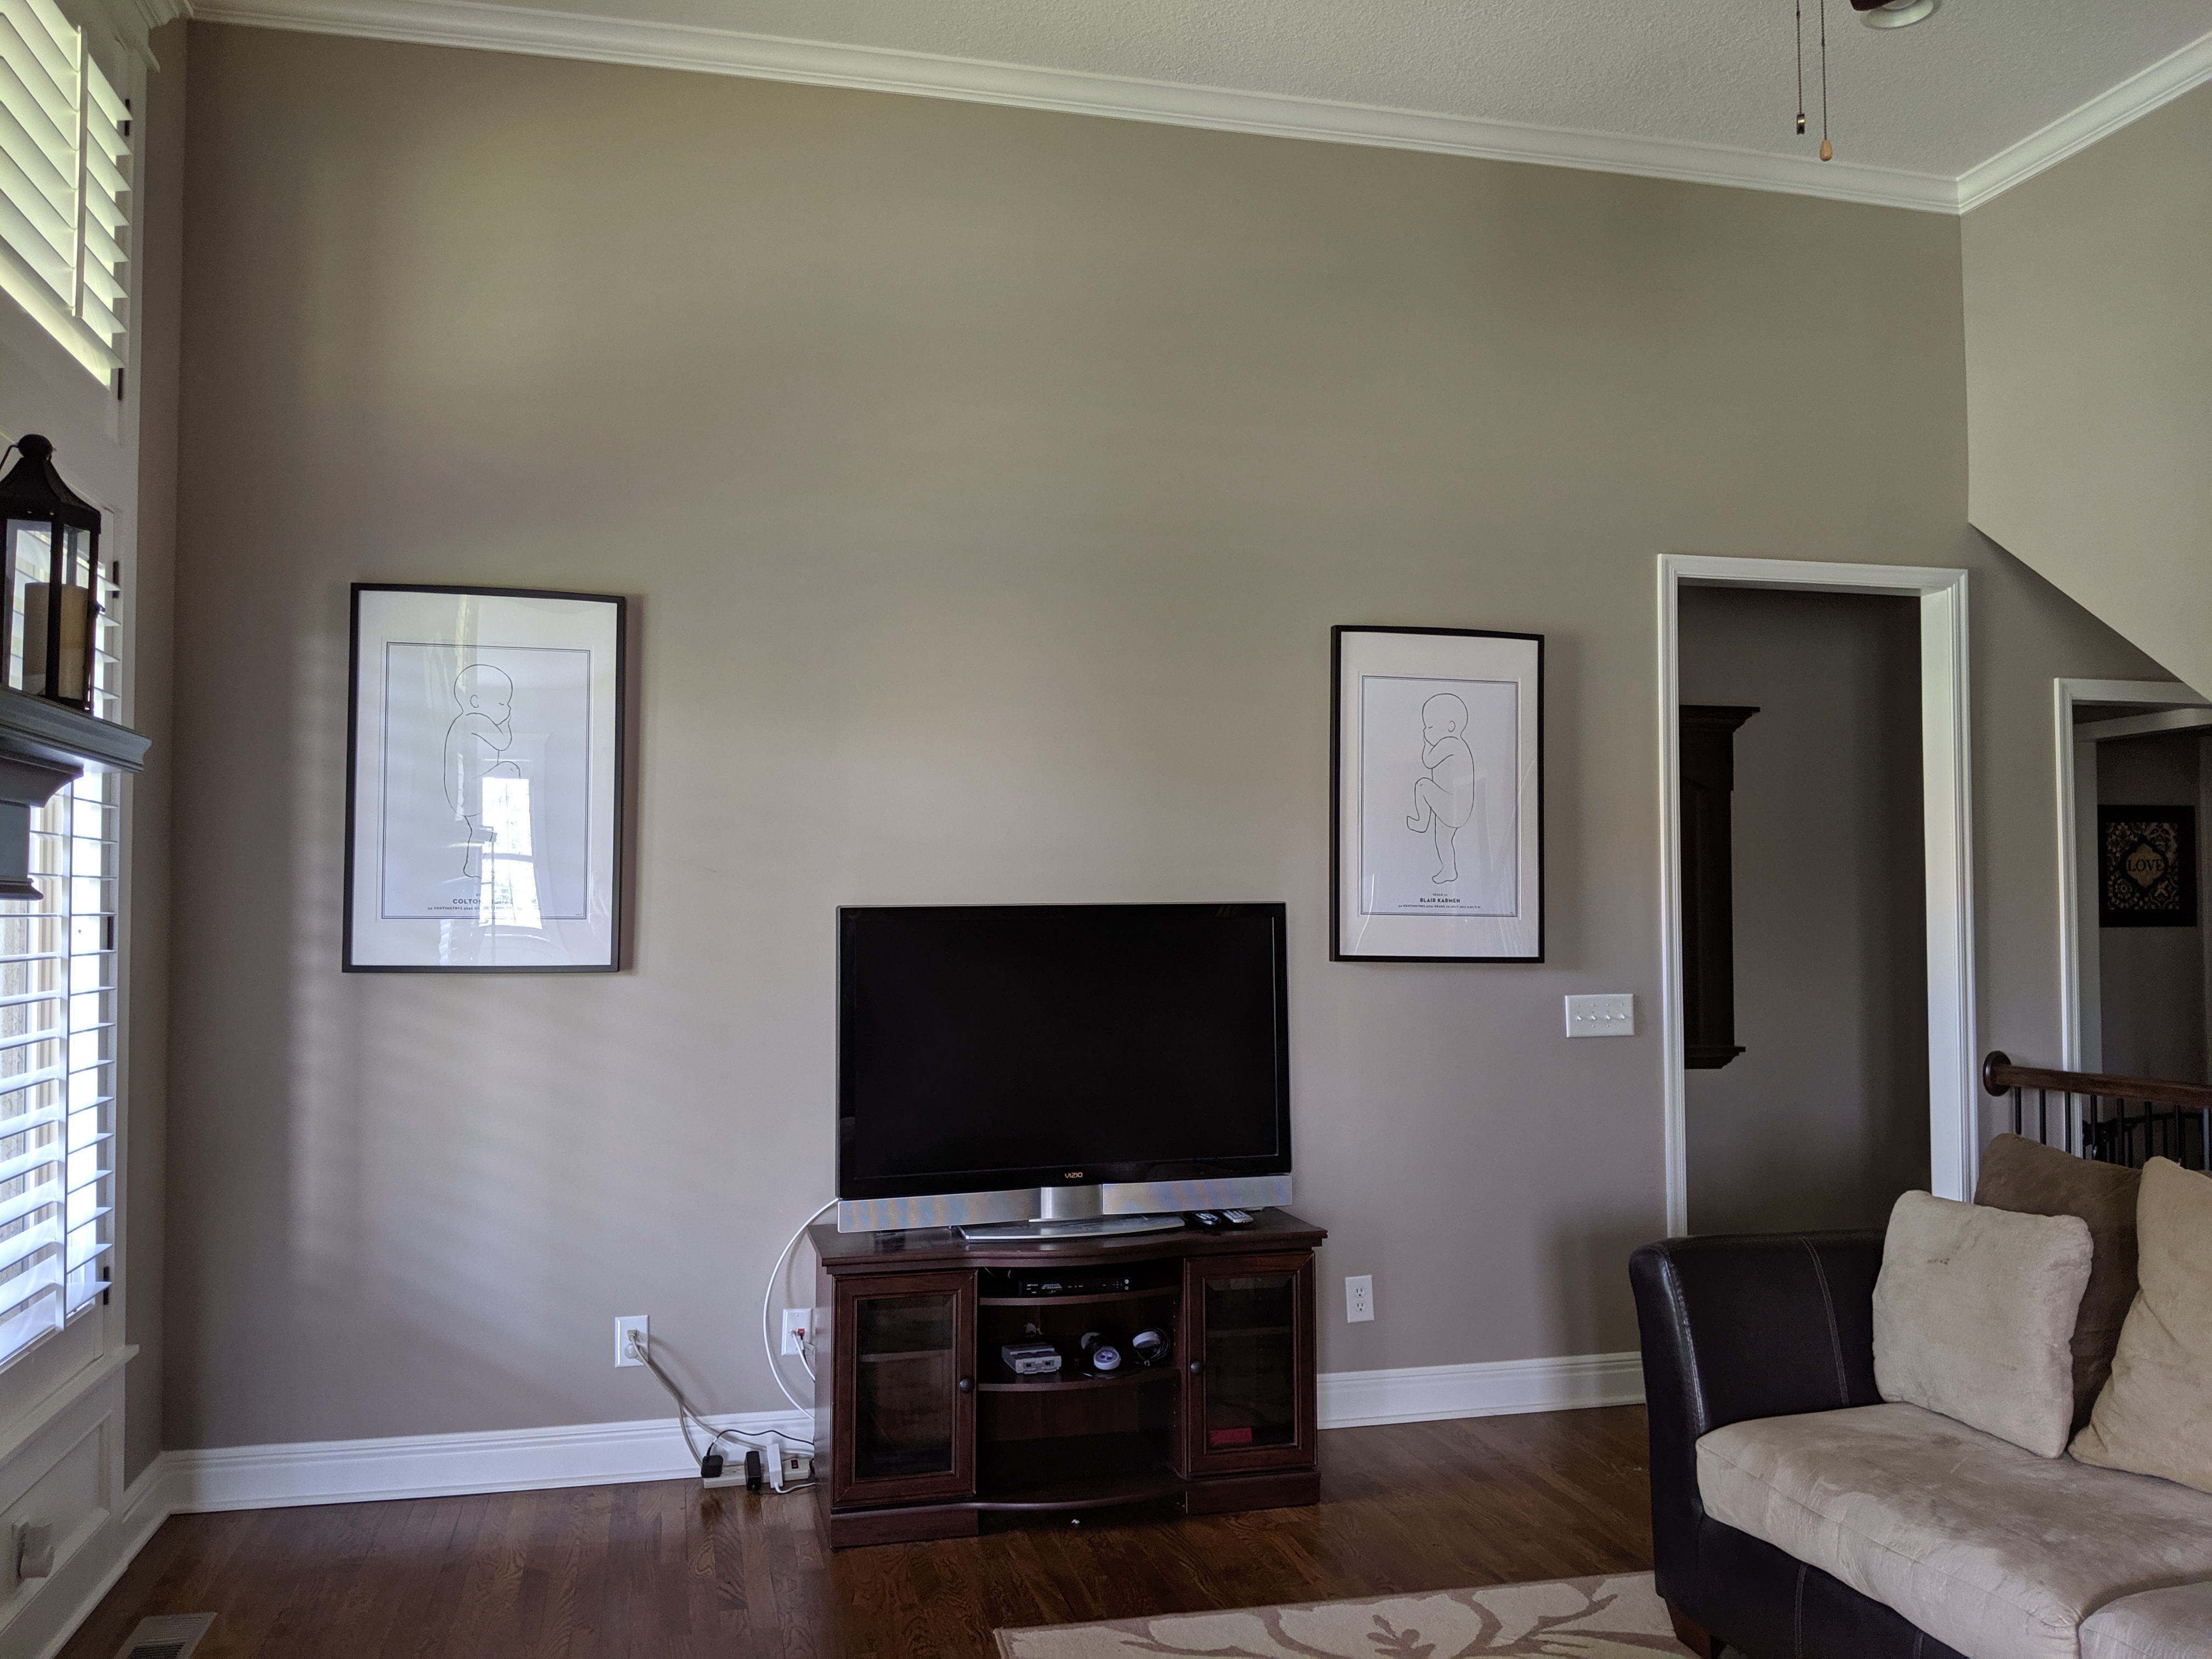 Living Room Gallery Wall Ideas 10